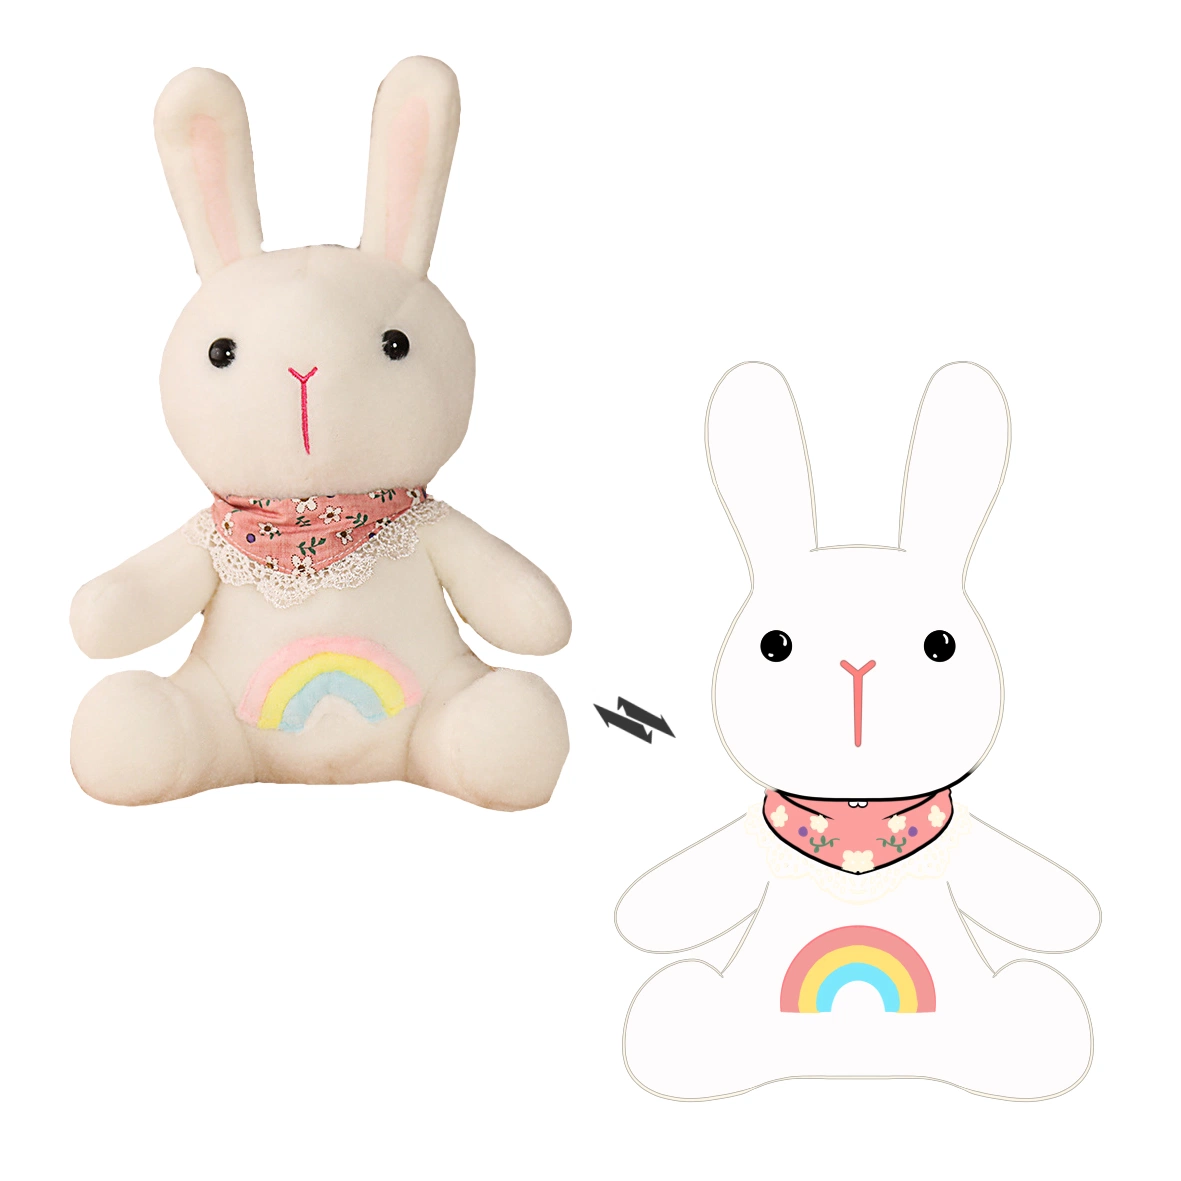 Custom Made Plush Toy Stuffed Animals Plushies Rabbit Toys with Rainbow